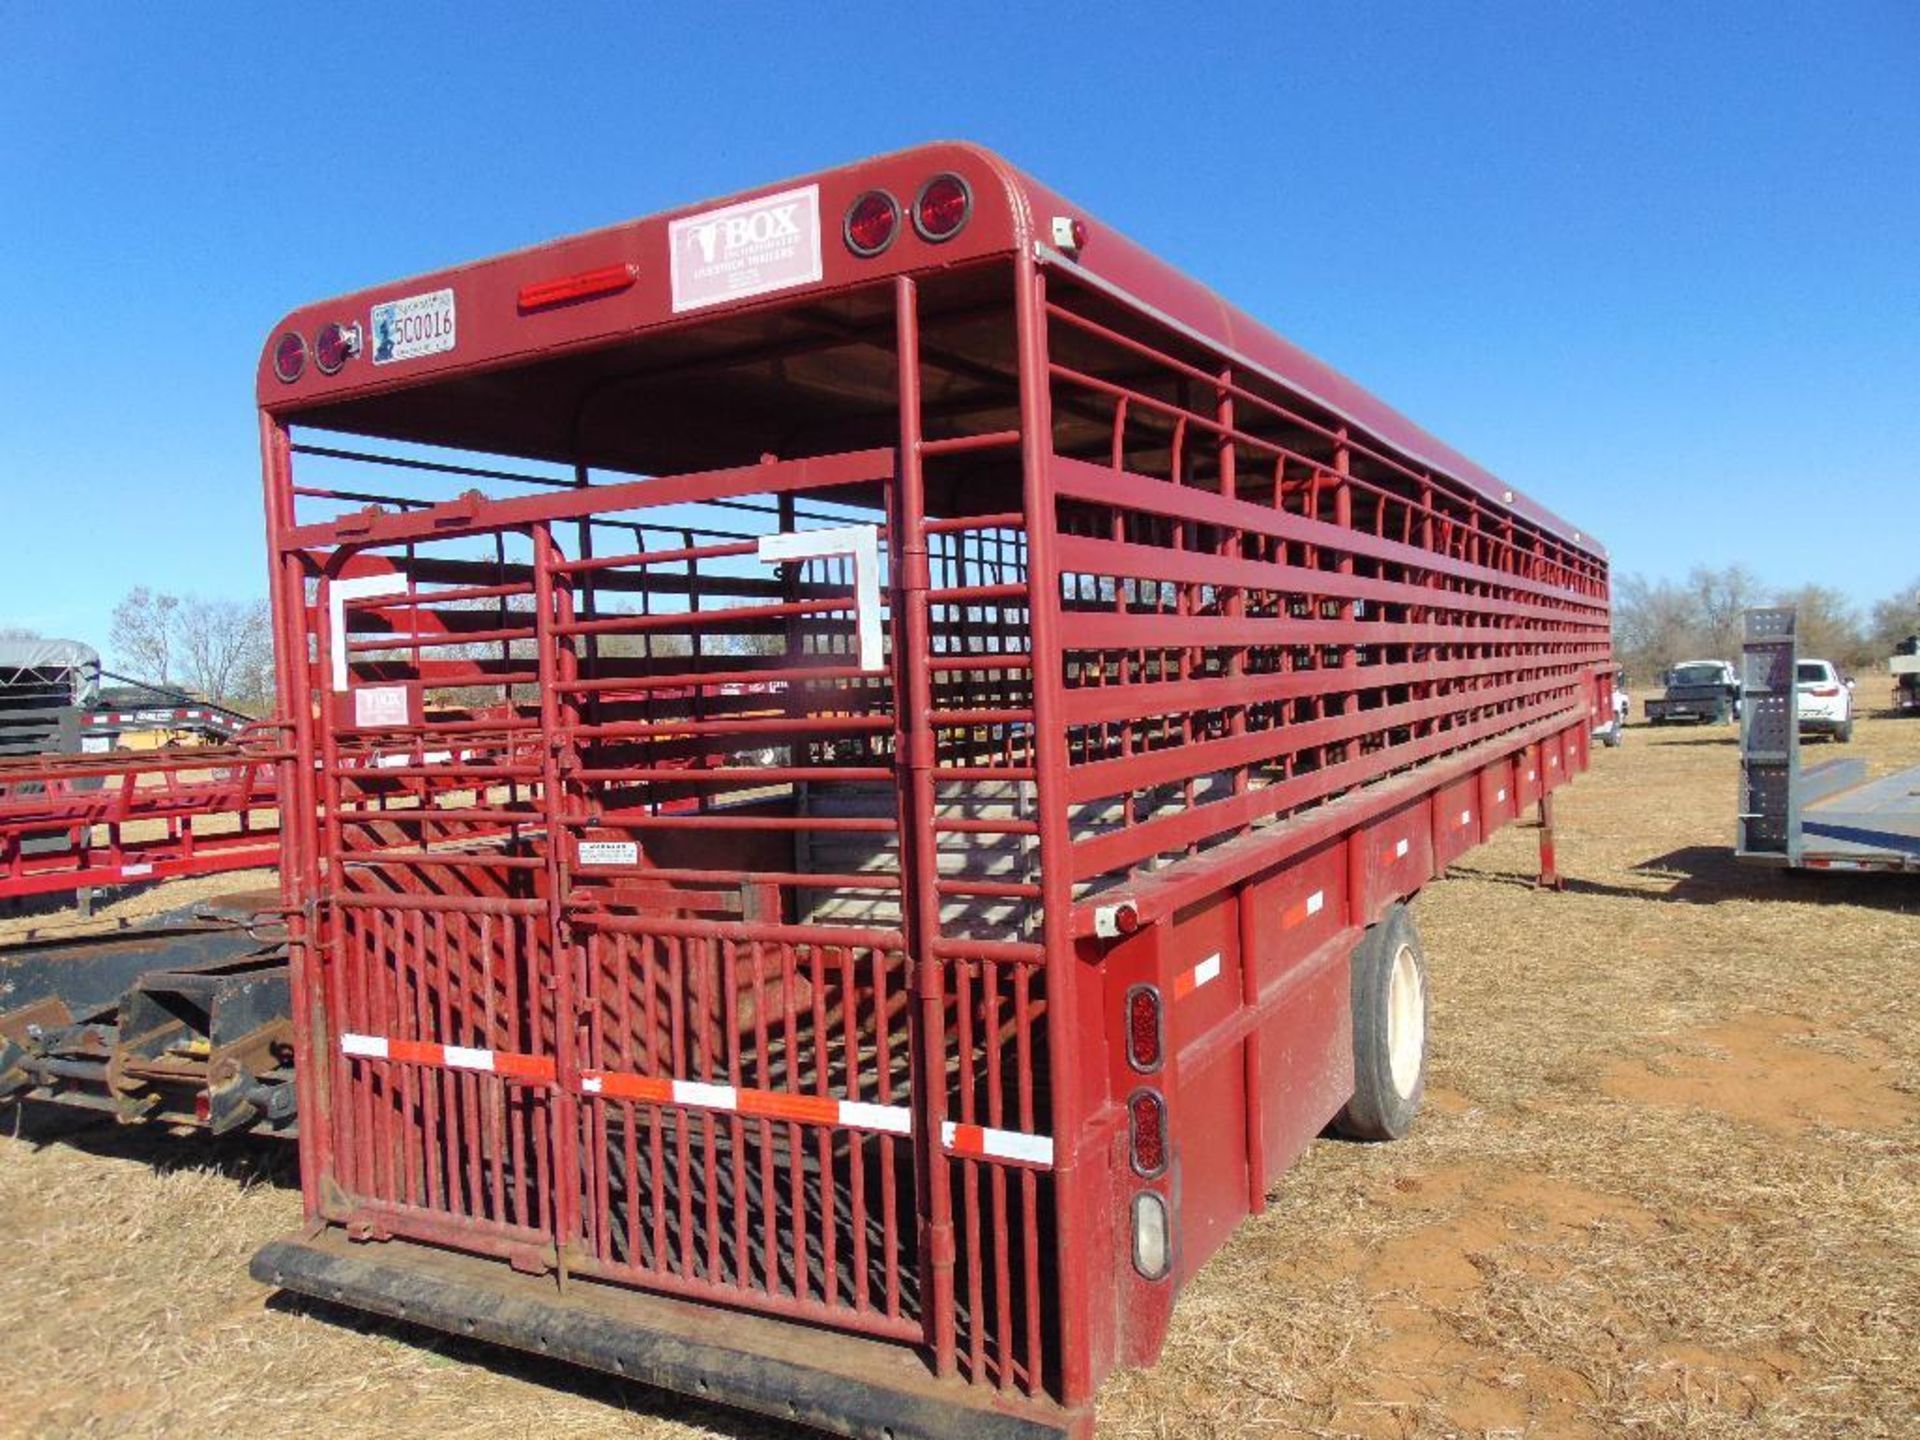 2007 Gooseneck S/A 43' Ground Load Livestock Trailer, s/n 16gs743147b060888, 3 cut gates, sliding - Image 6 of 6